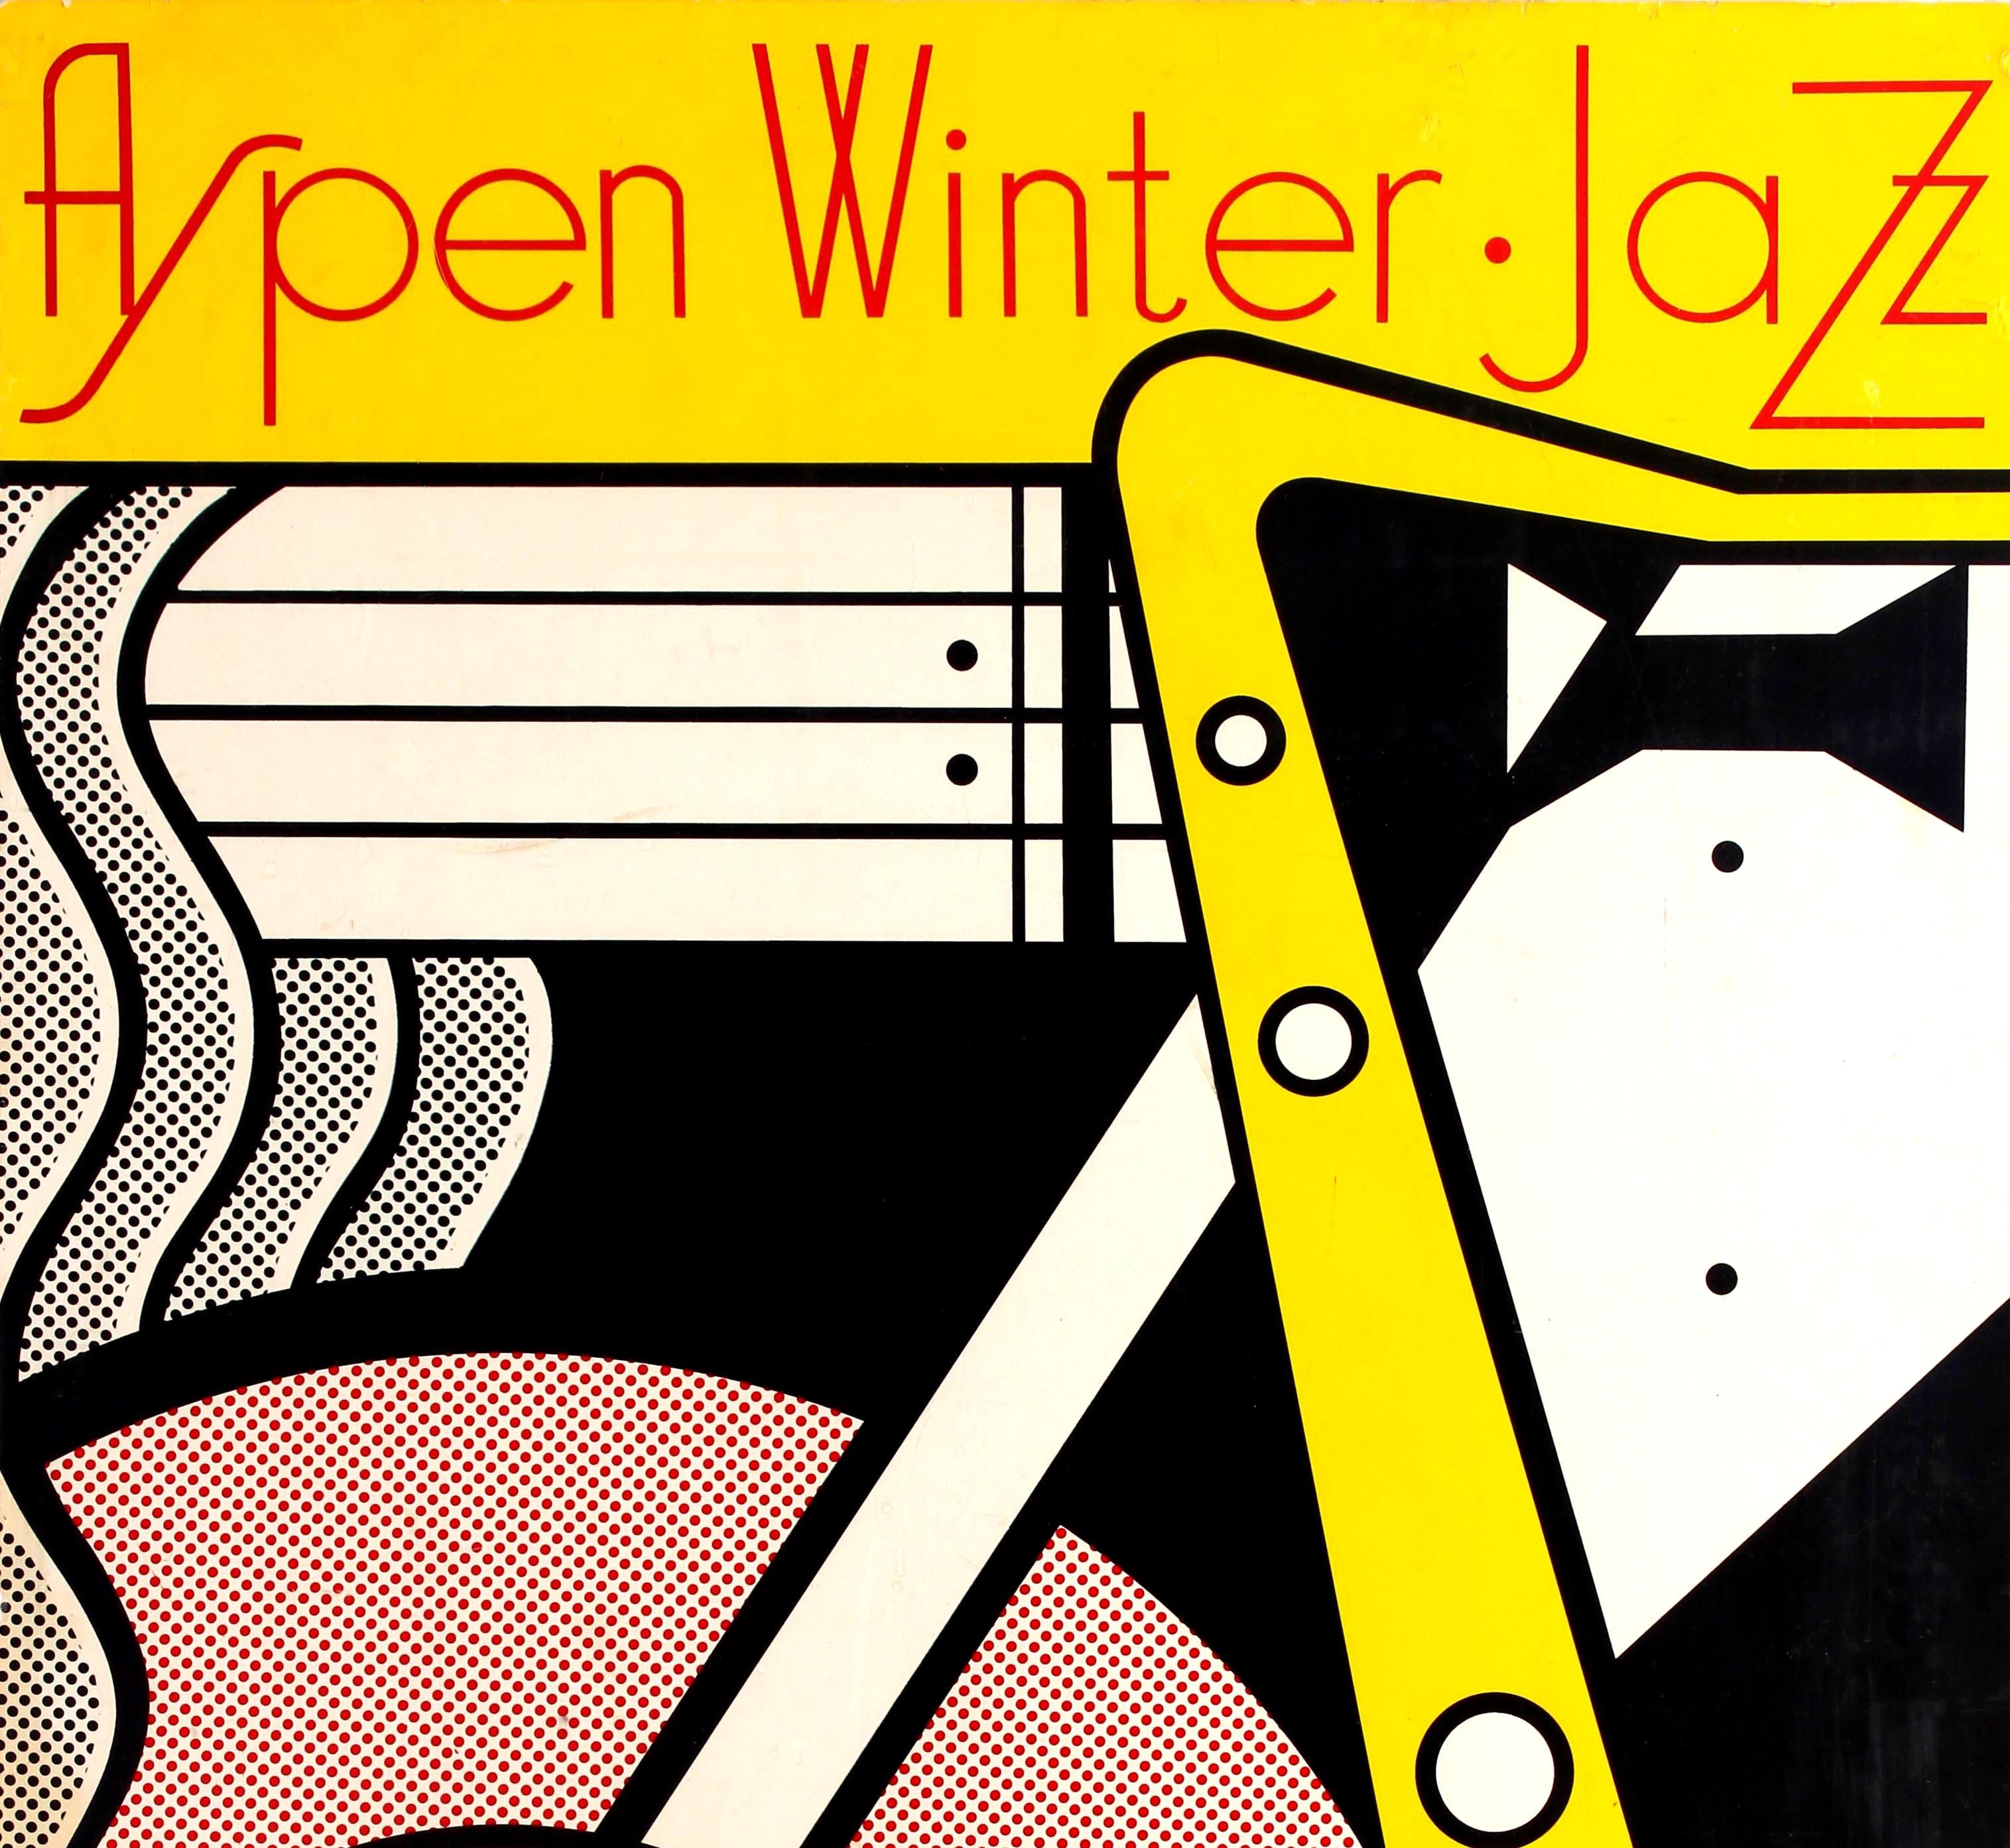 Original Vintage Pop Art Music Poster For The Aspen Winter Jazz Festival In 1967 - Print by Roy Lichtenstein